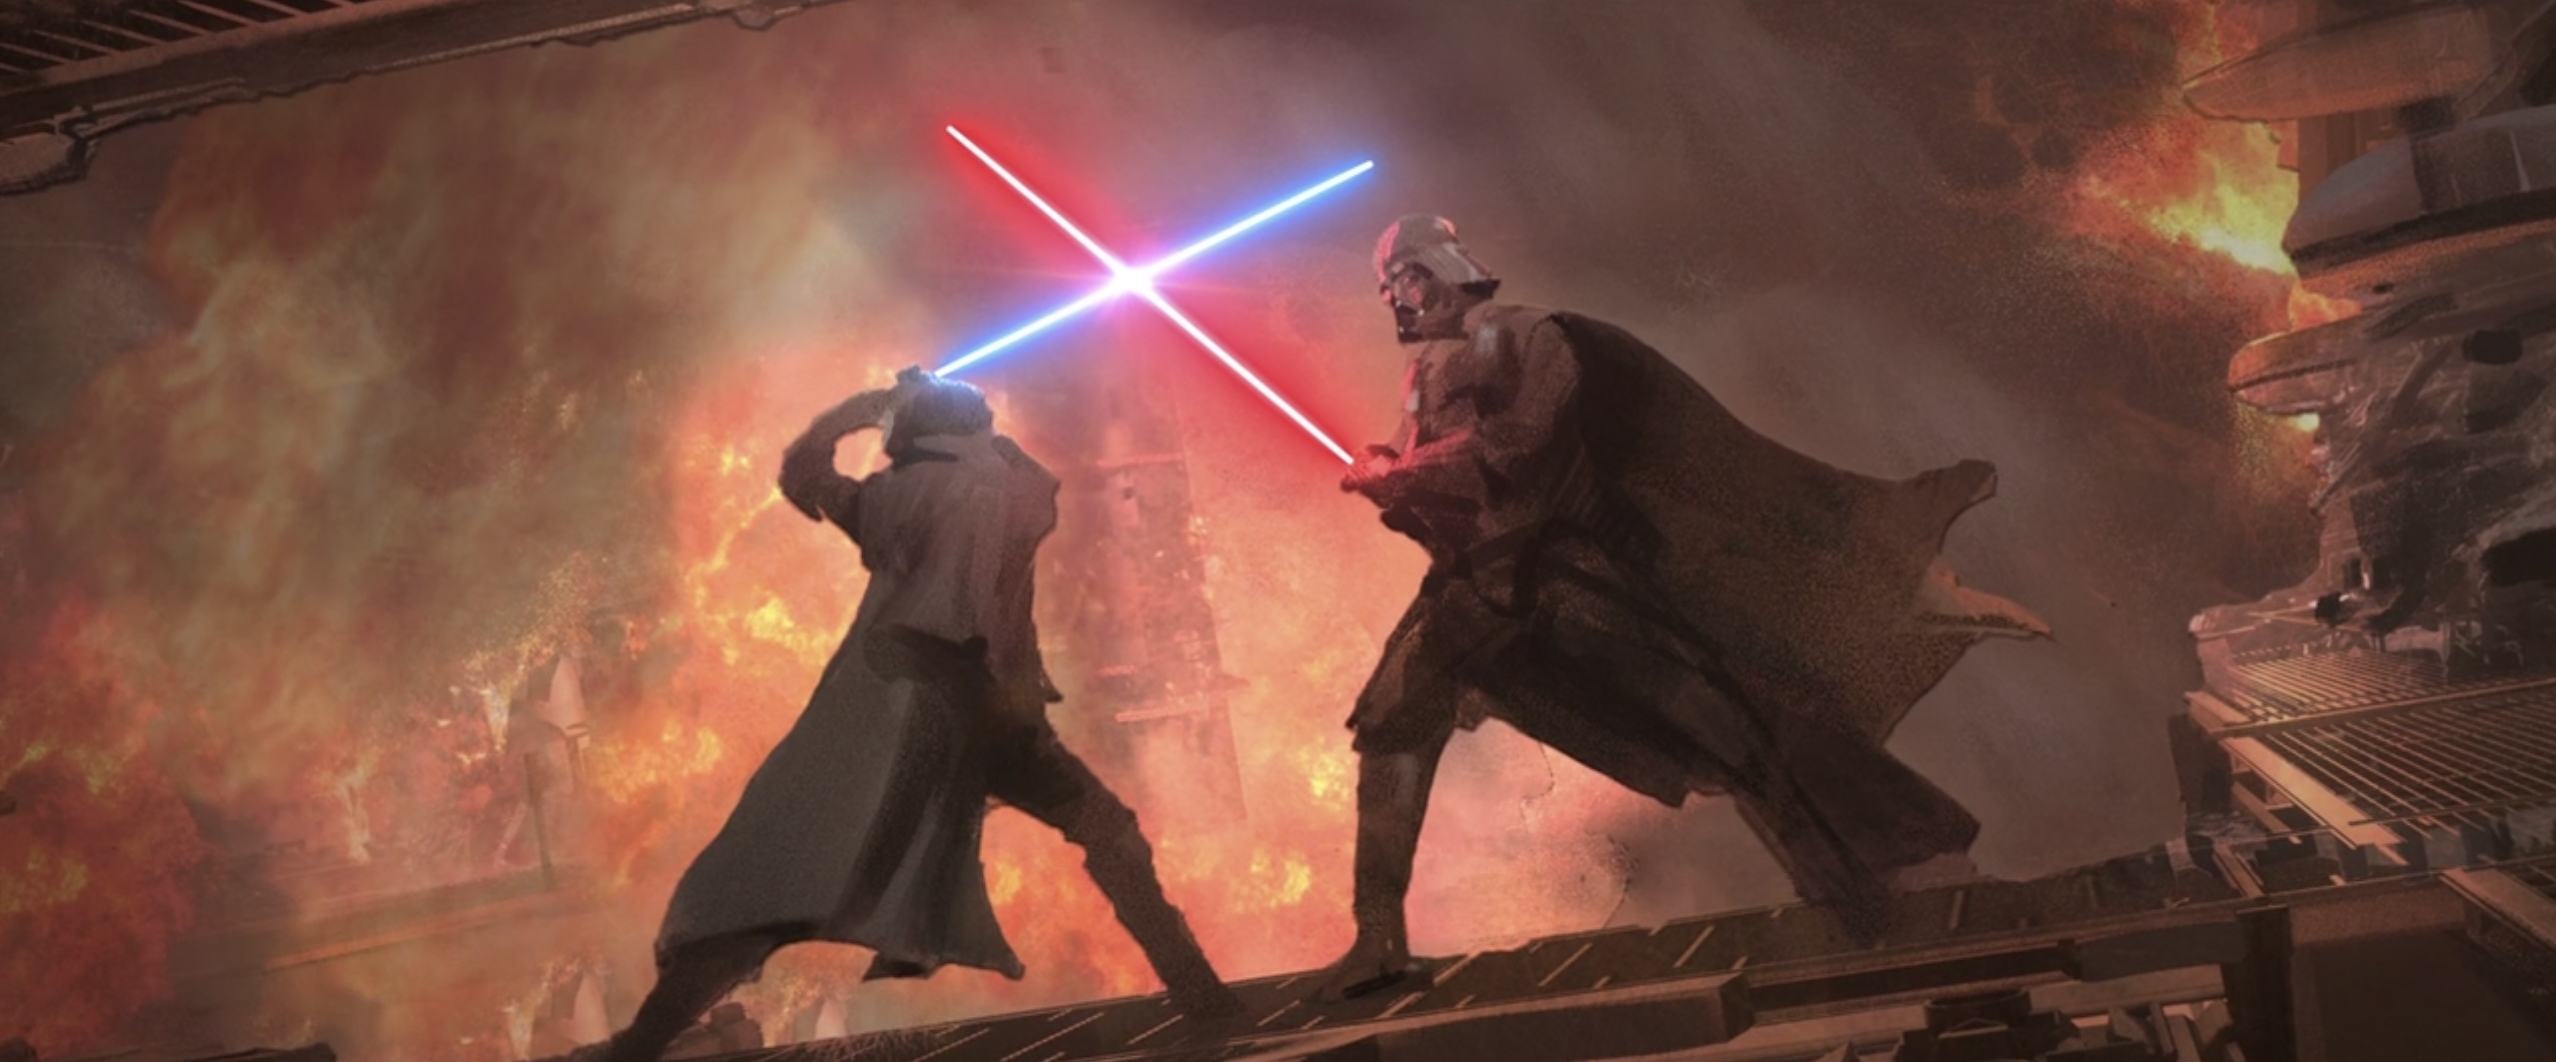 Obi-Wan Kenobi Darth Vader Concept Art